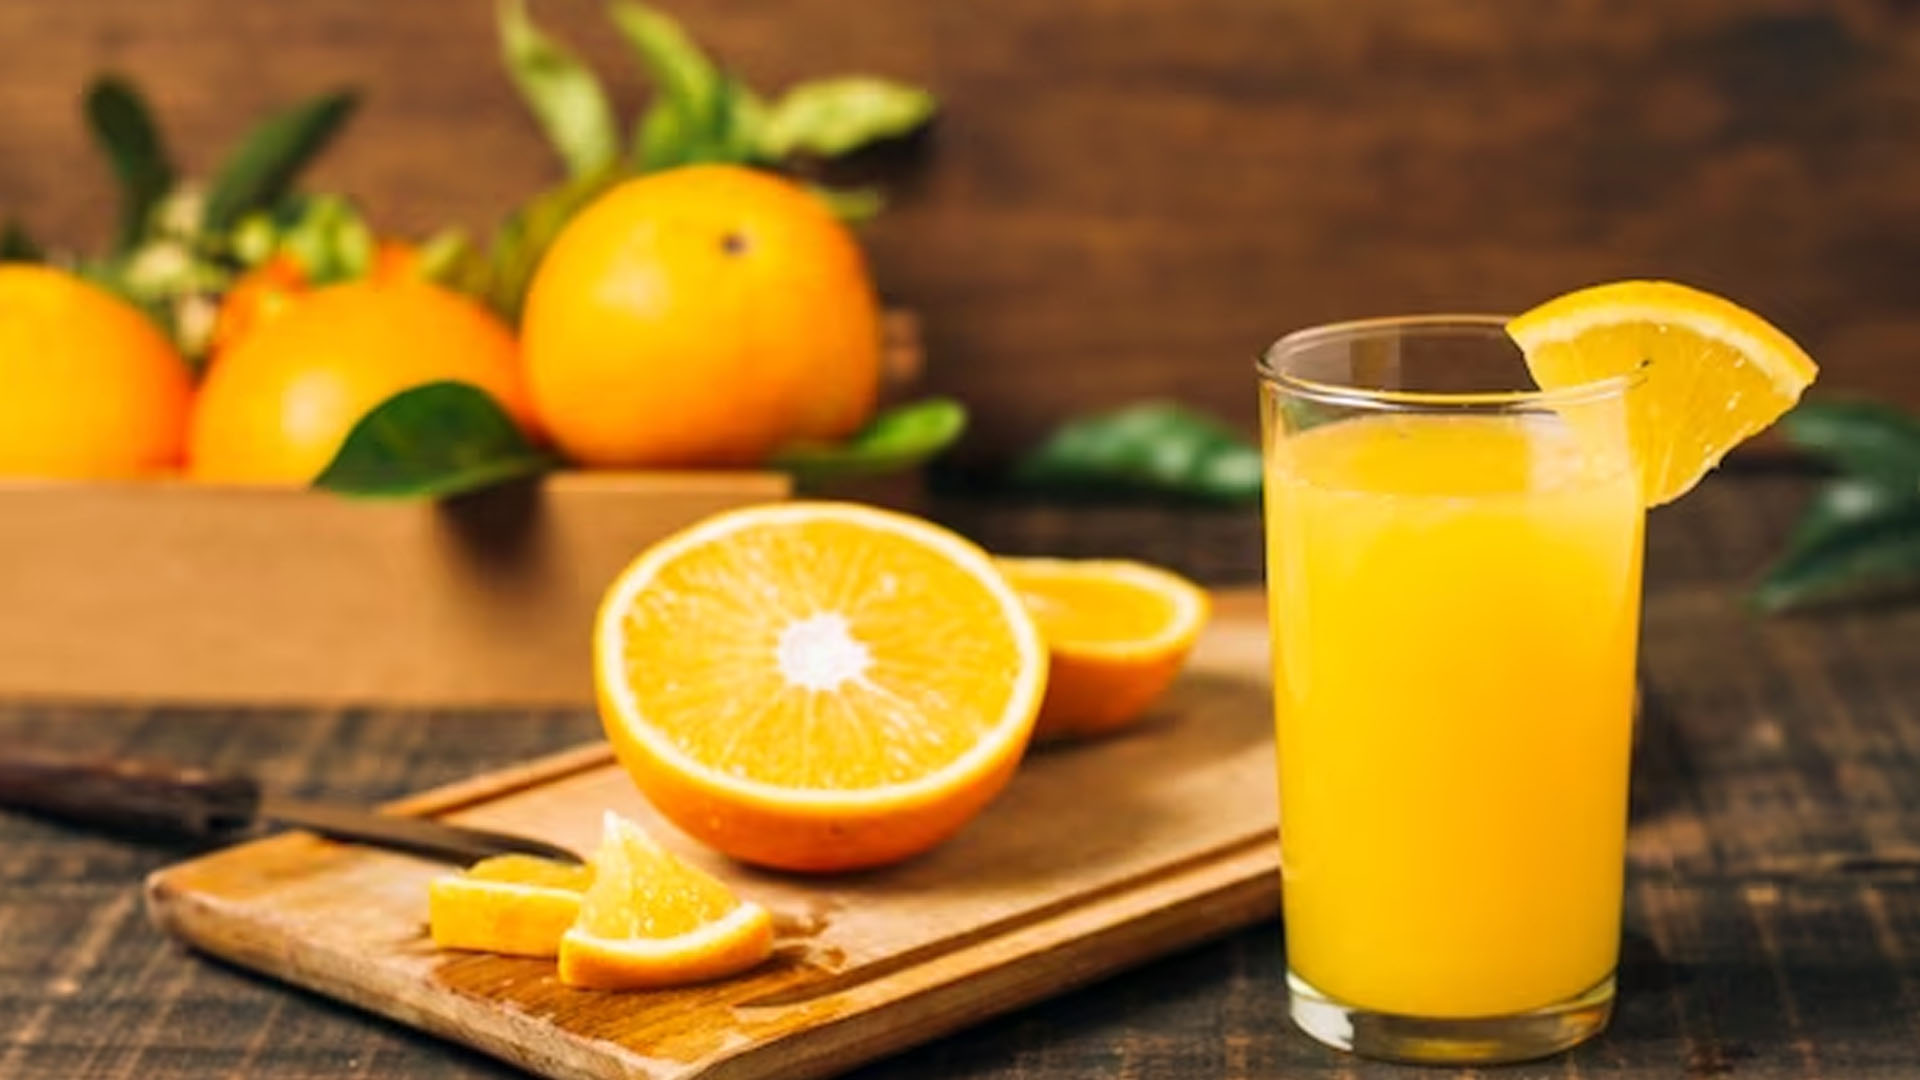 What are the Health Benefits of Orange Juice?